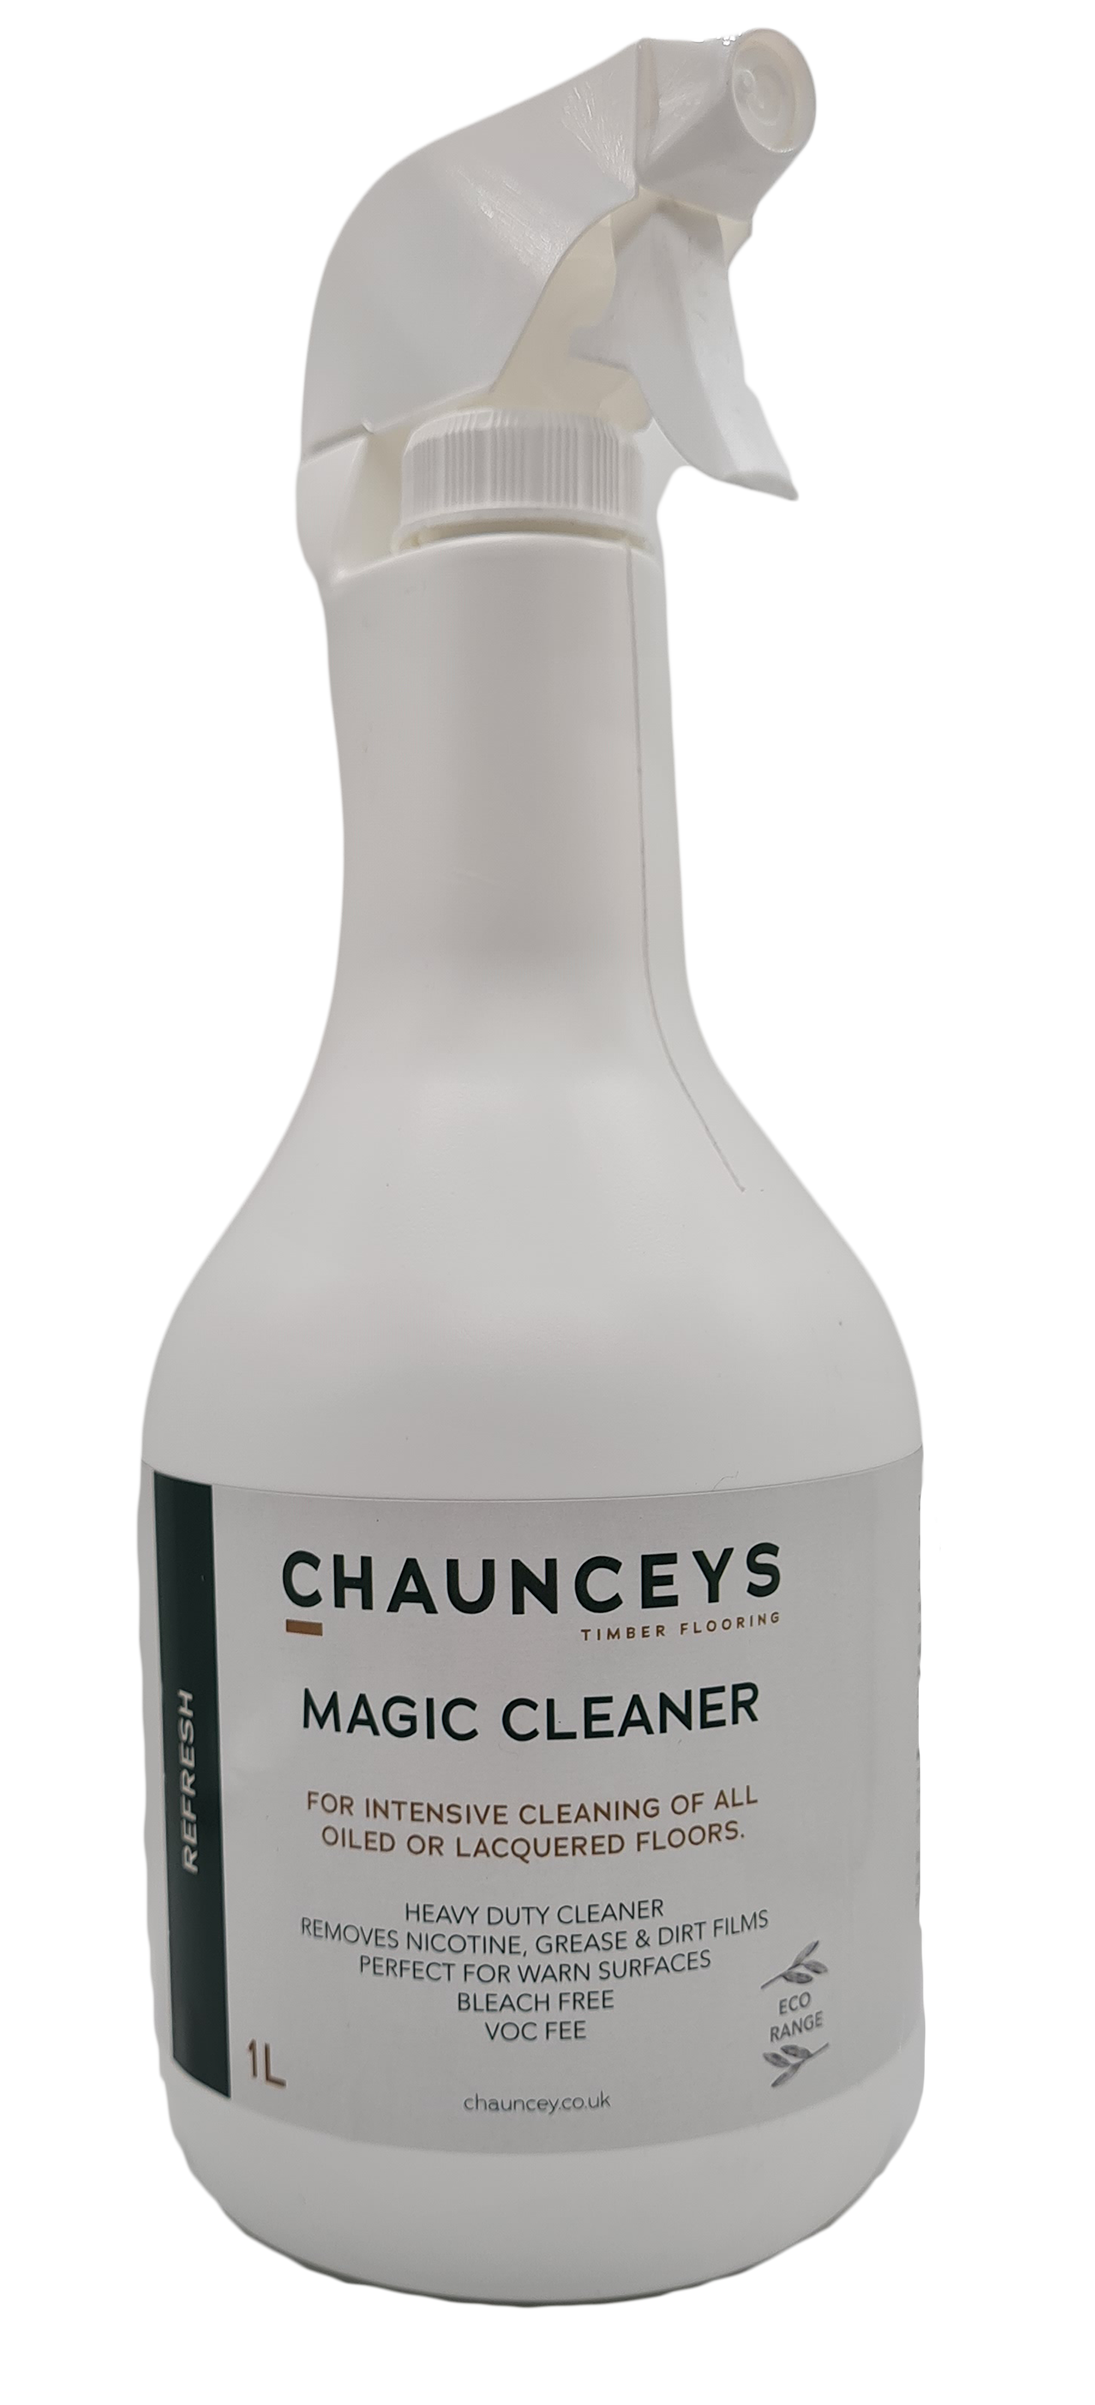 Chaunceys Magic Cleaner